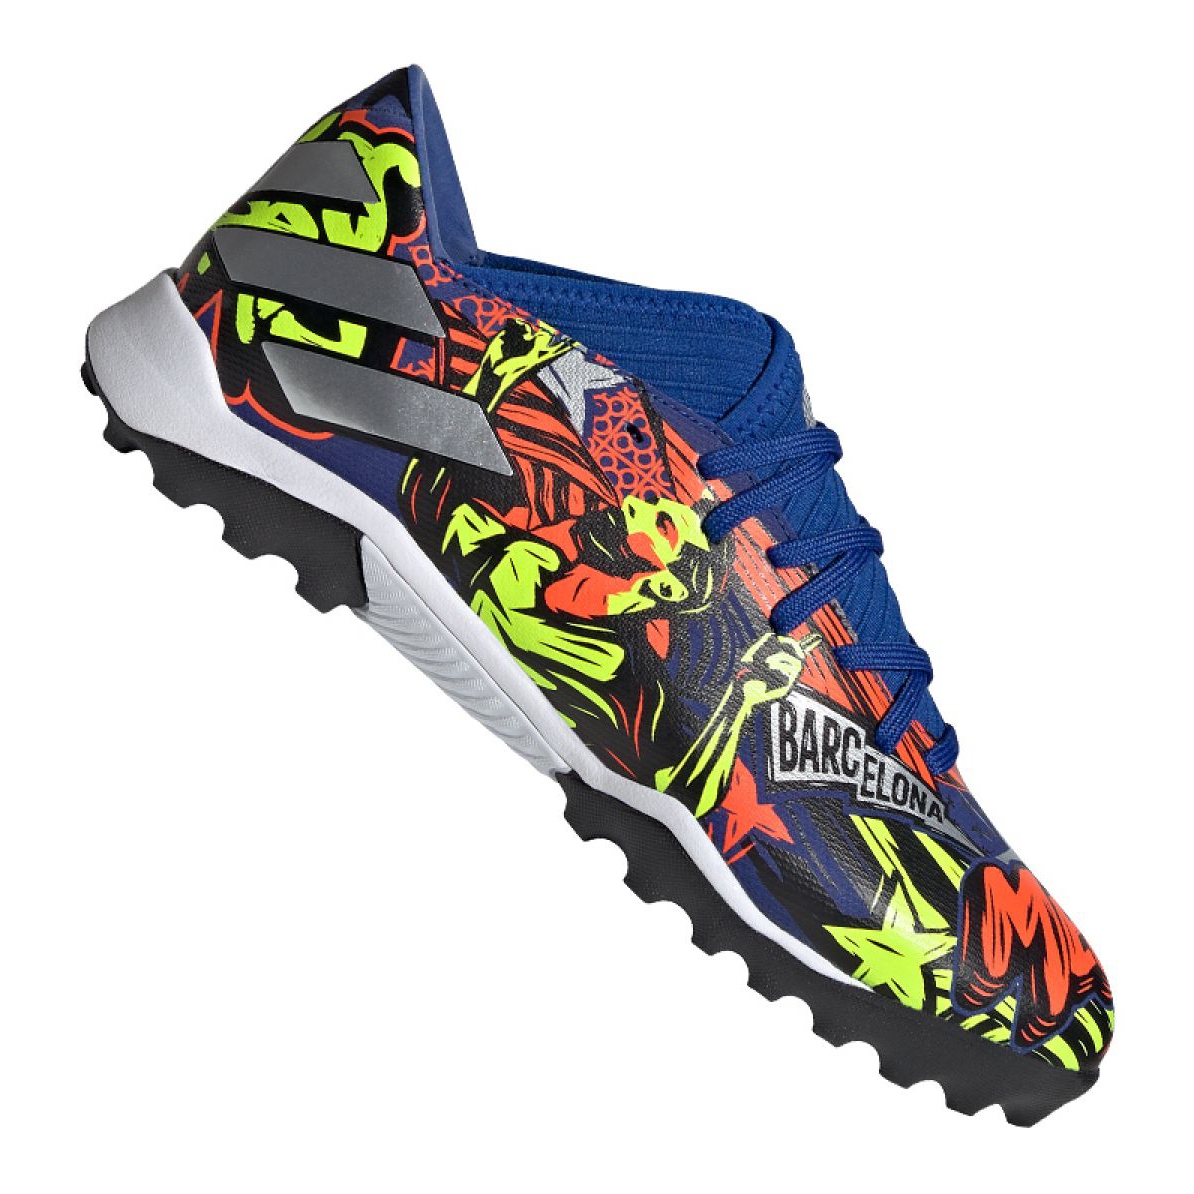 Adidas Nemeziz Messi 19 3 Tf M Eh0592 Football Boots Multicolored Multicolored Keeshoes